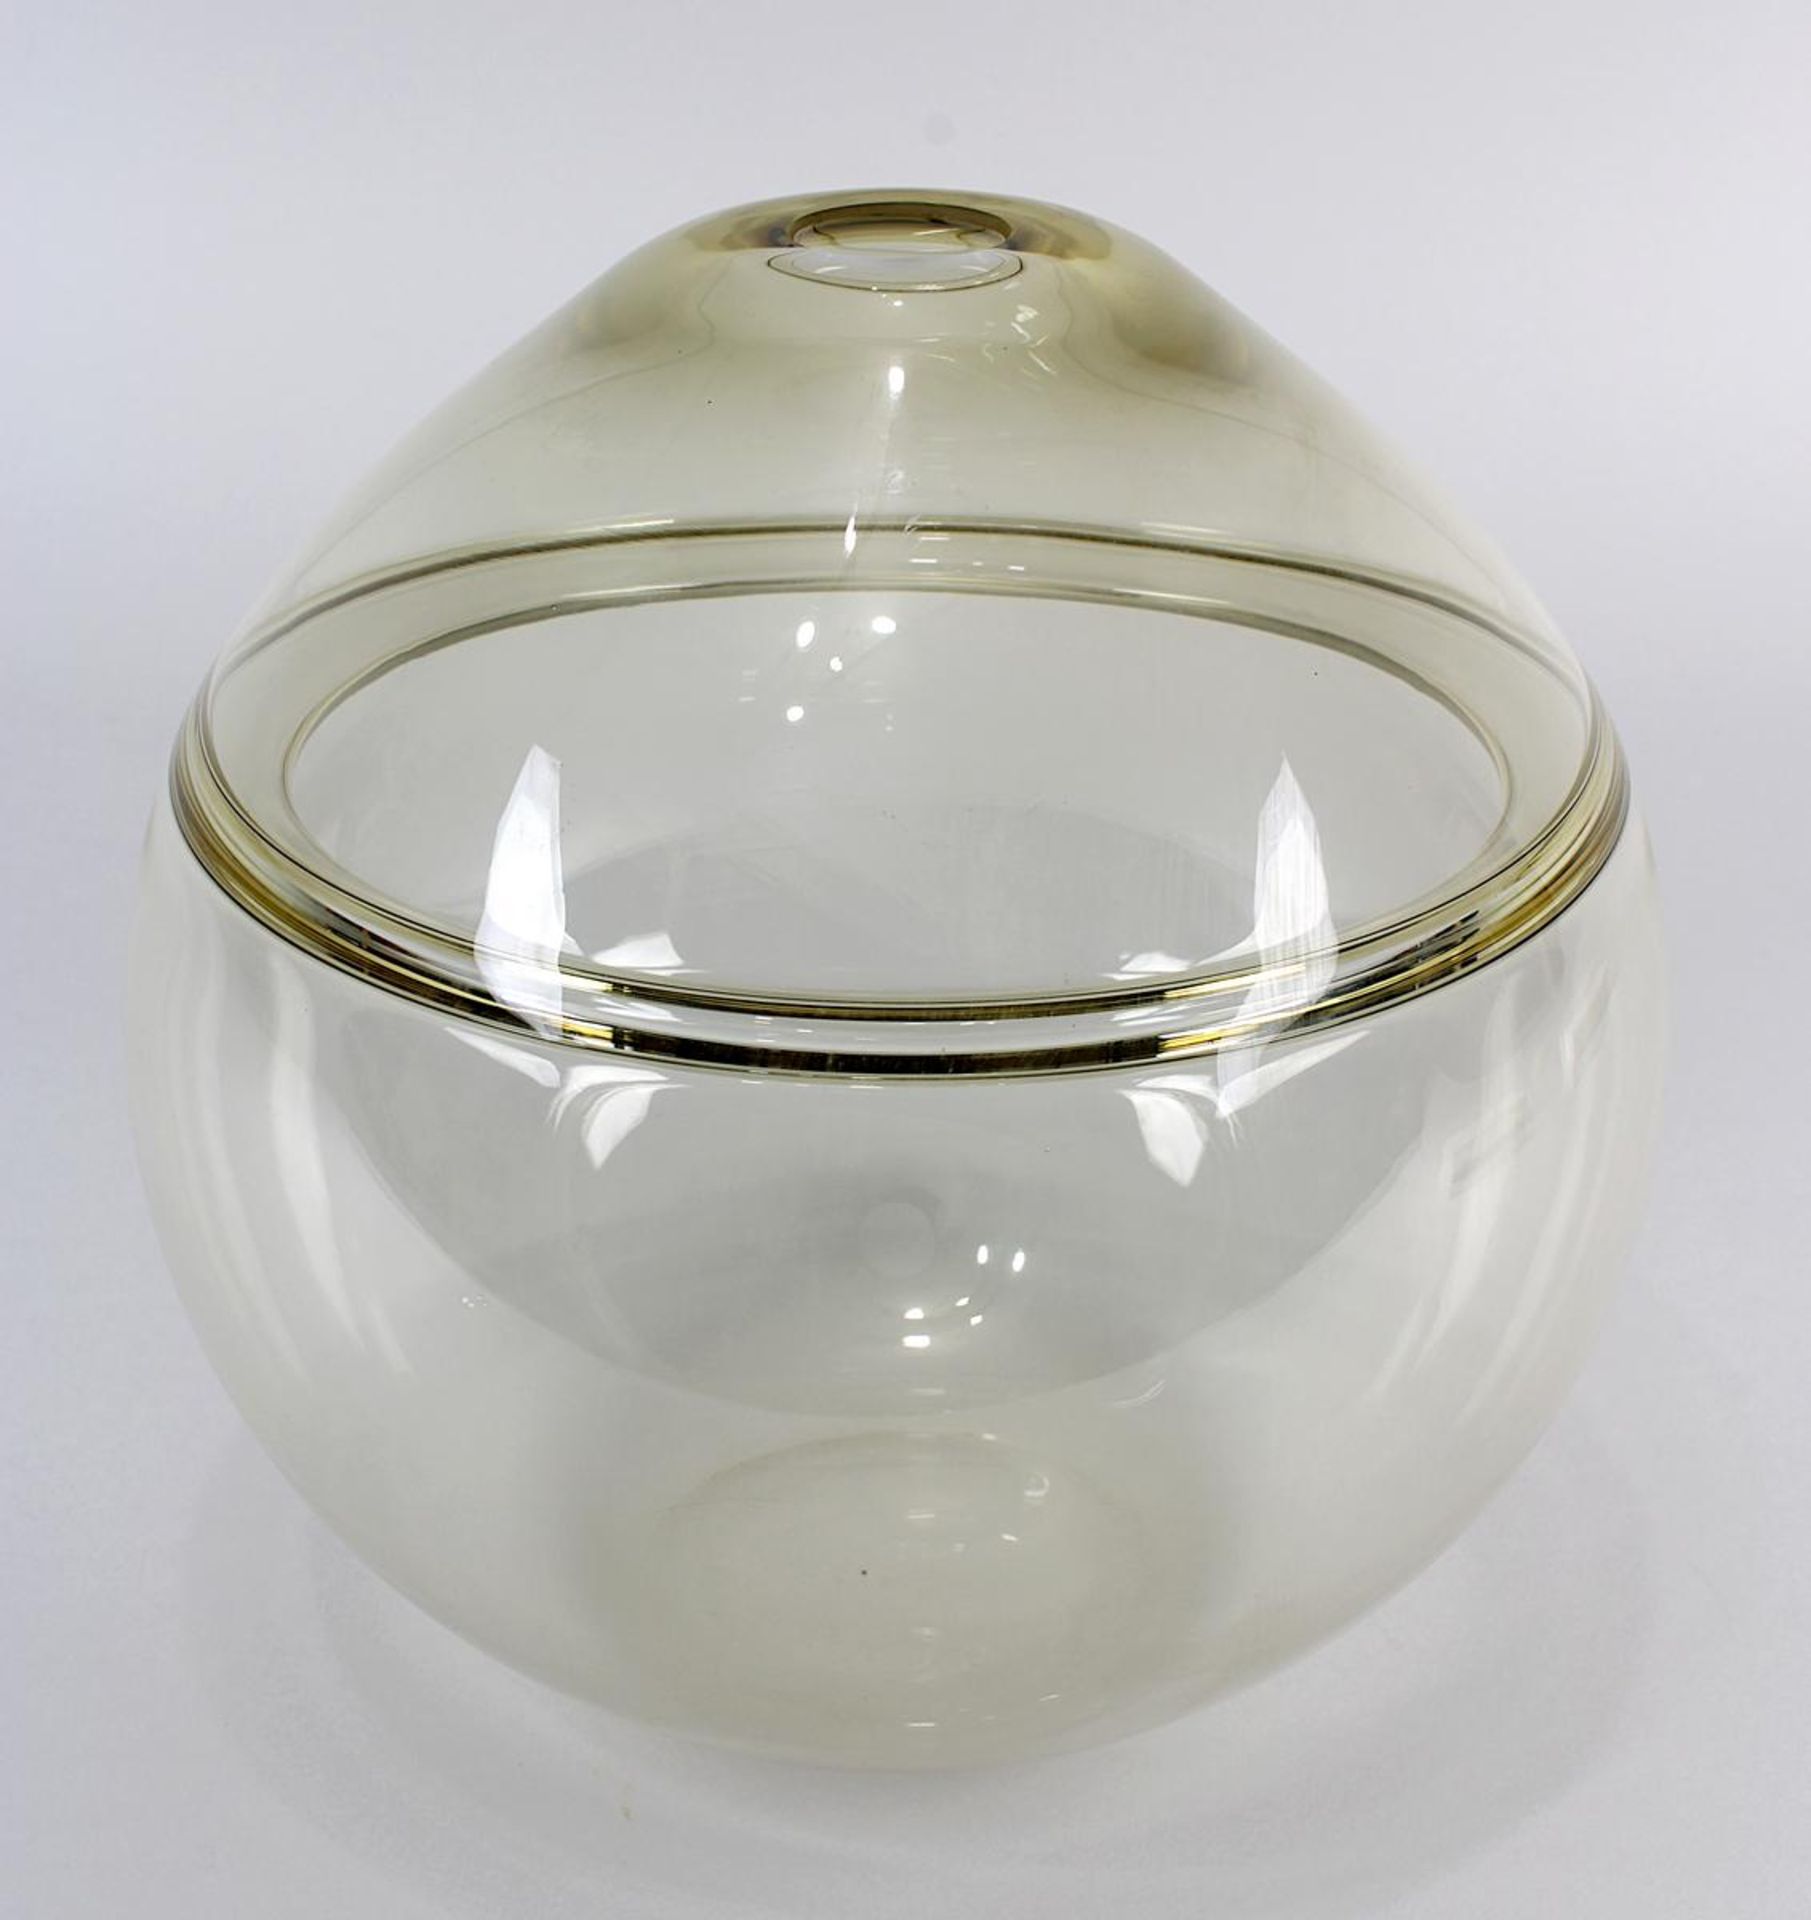 Paolo Crepax Kugelvase, Murano 2015, kugelförmige Vase aus hellgelbem Kristallglas, im oberen